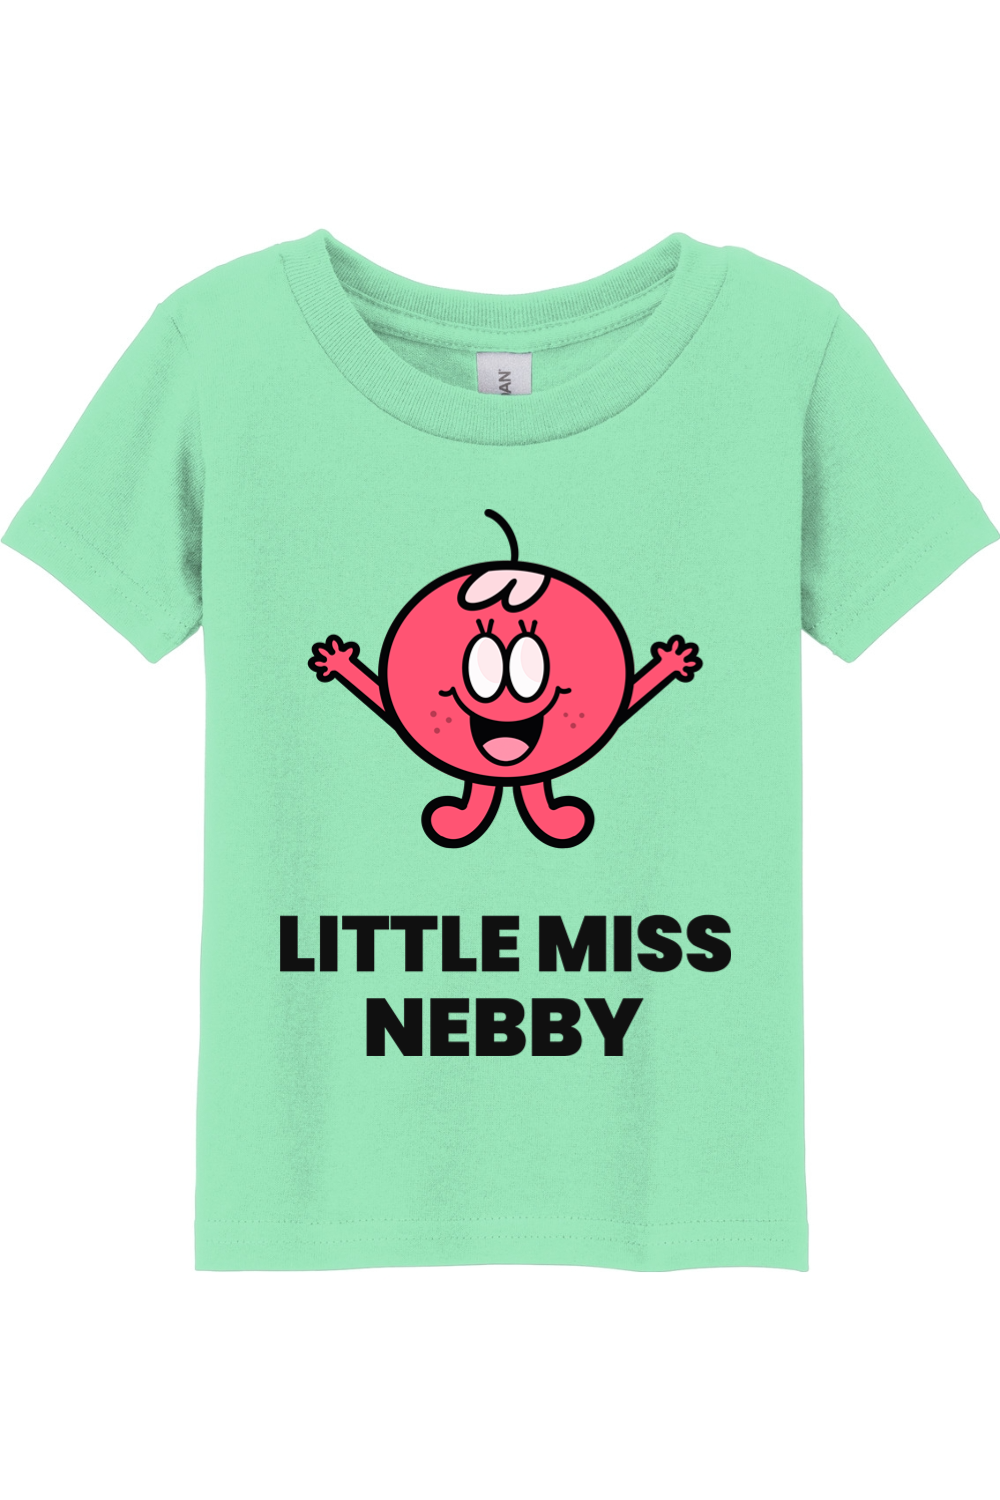 Little Miss Nebby - Toddler T-Shirt - Yinzylvania